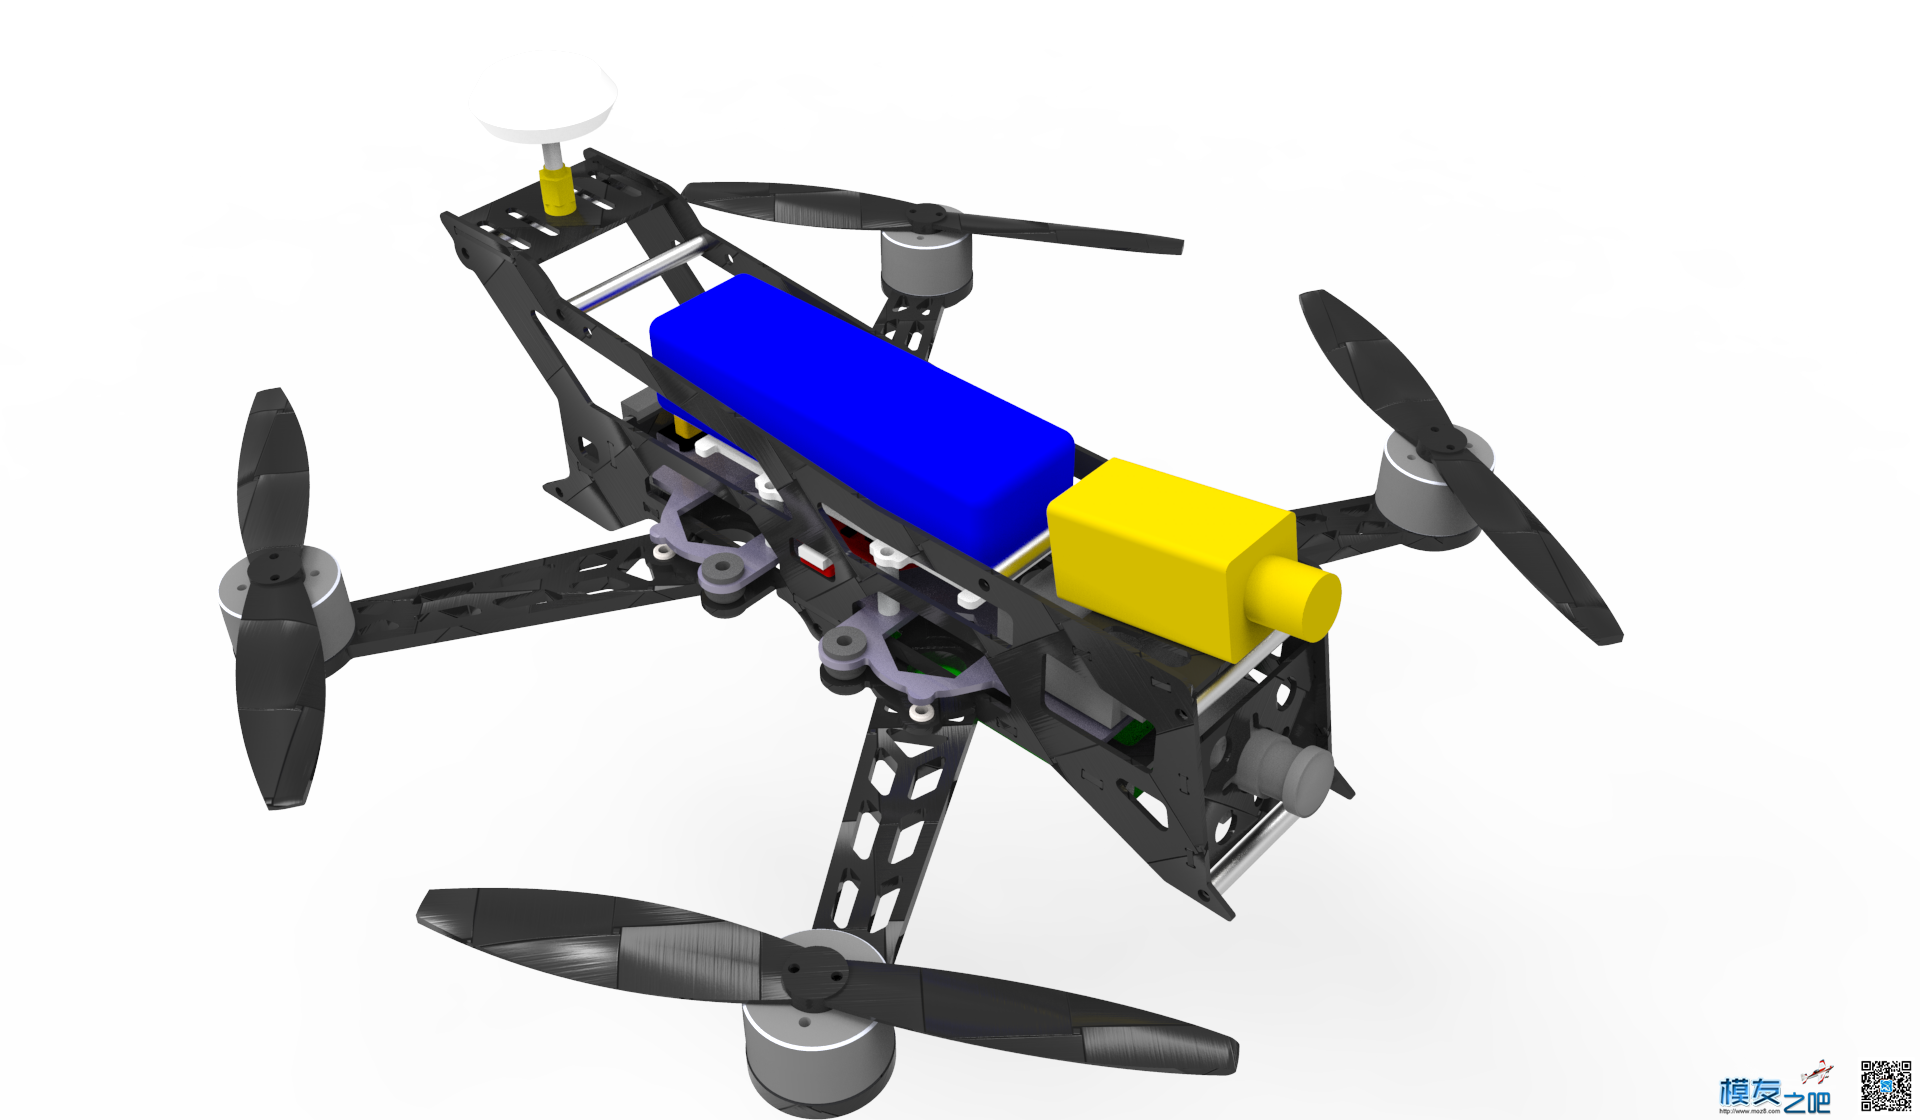 AlienCopter 穿越者V 新品首发 穿越机,多旋翼,电池,天线,图传 作者:xiaoxuexue11111 9087 